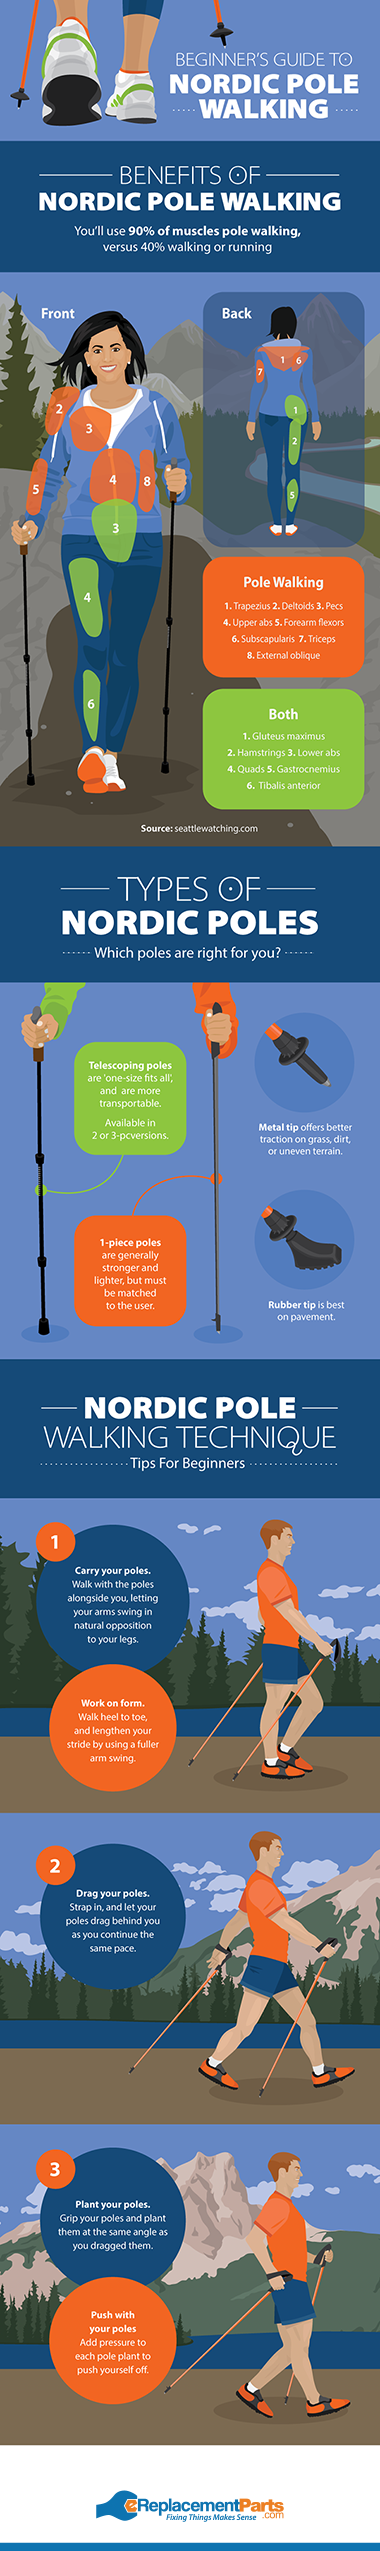 Nordic Pole Walking Guide